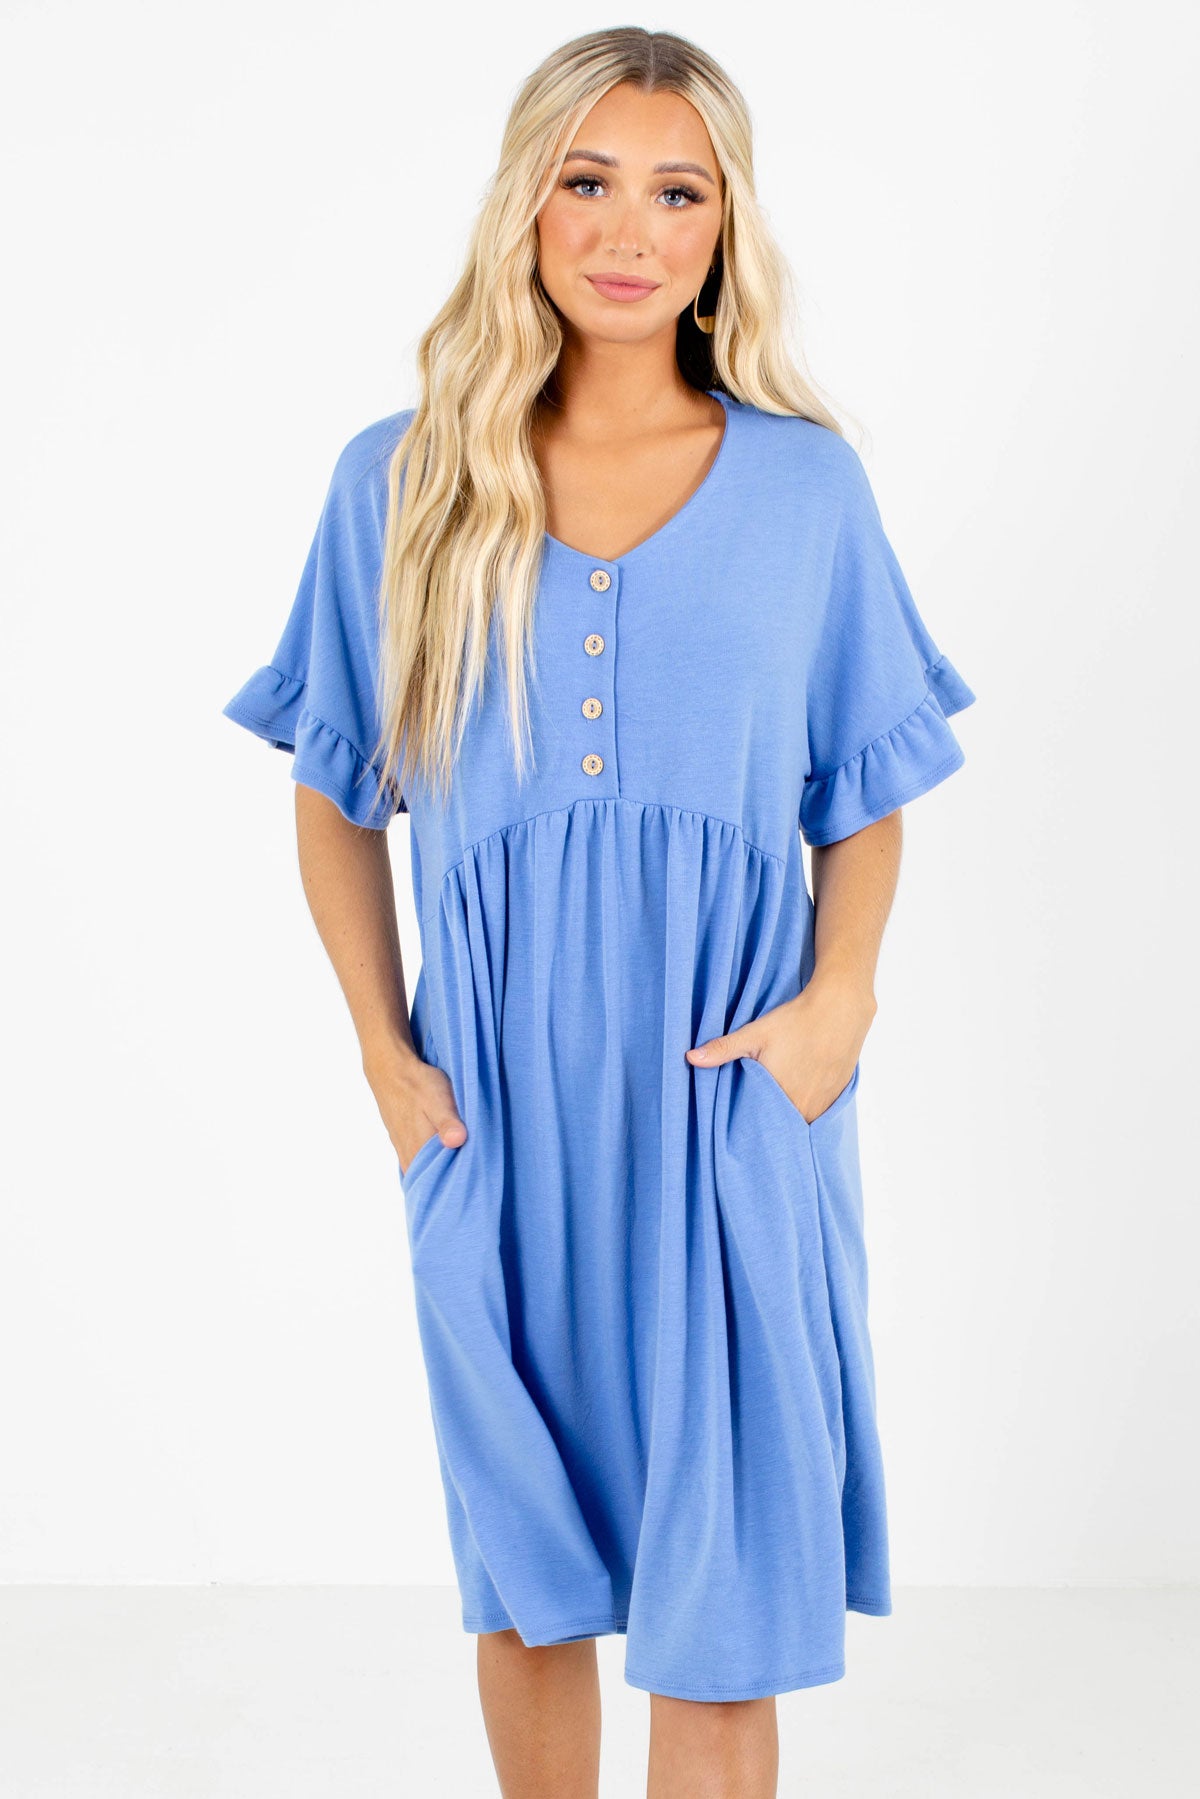 Blue Button-Up Bodice Boutique Knee-Length Dresses for Women